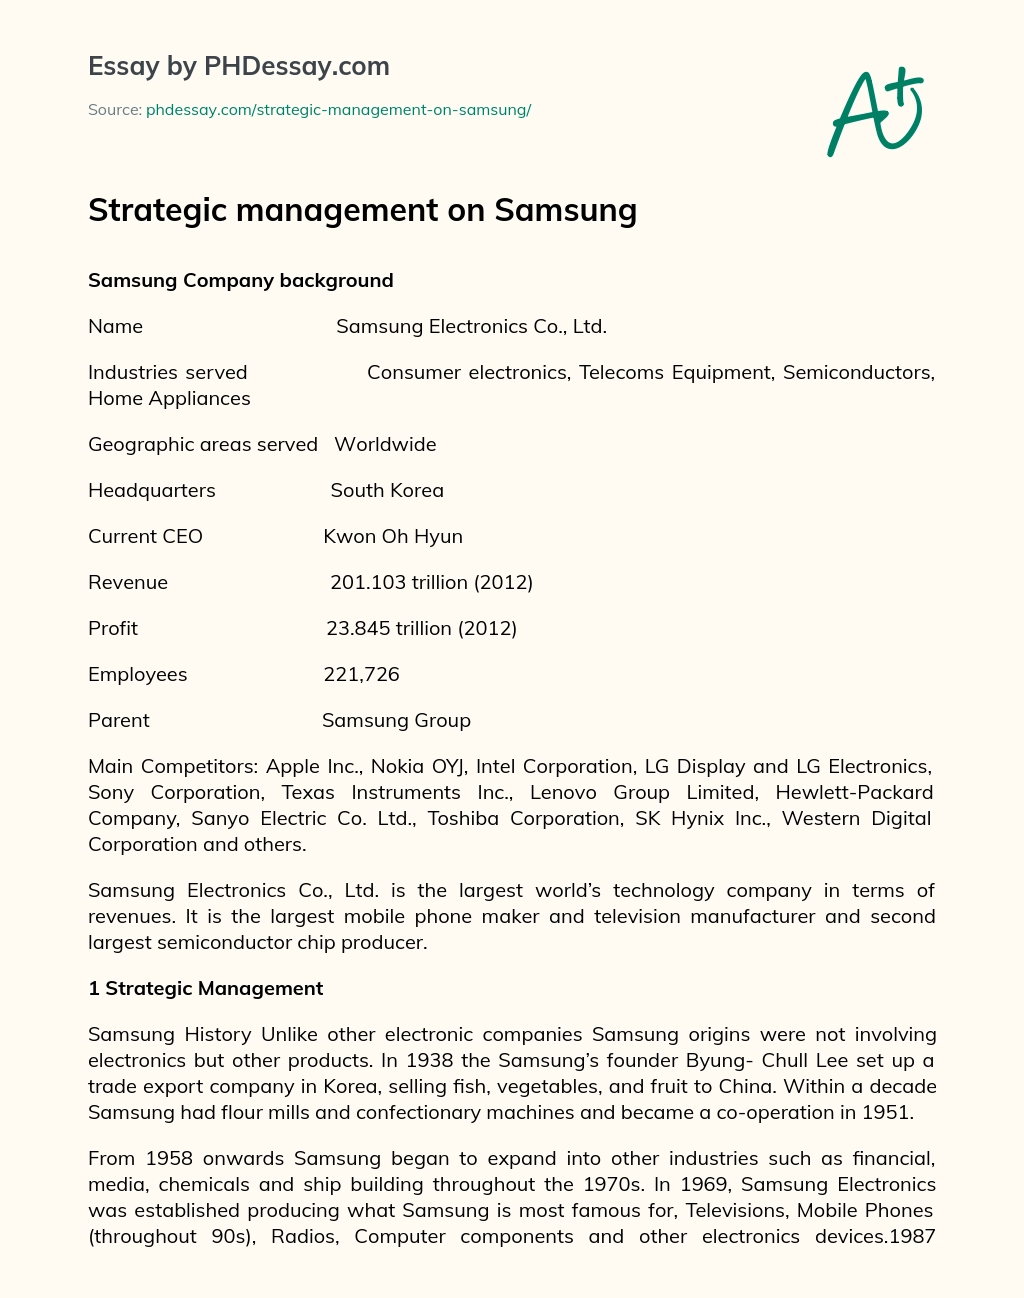 Strategic Management on Samsung essay